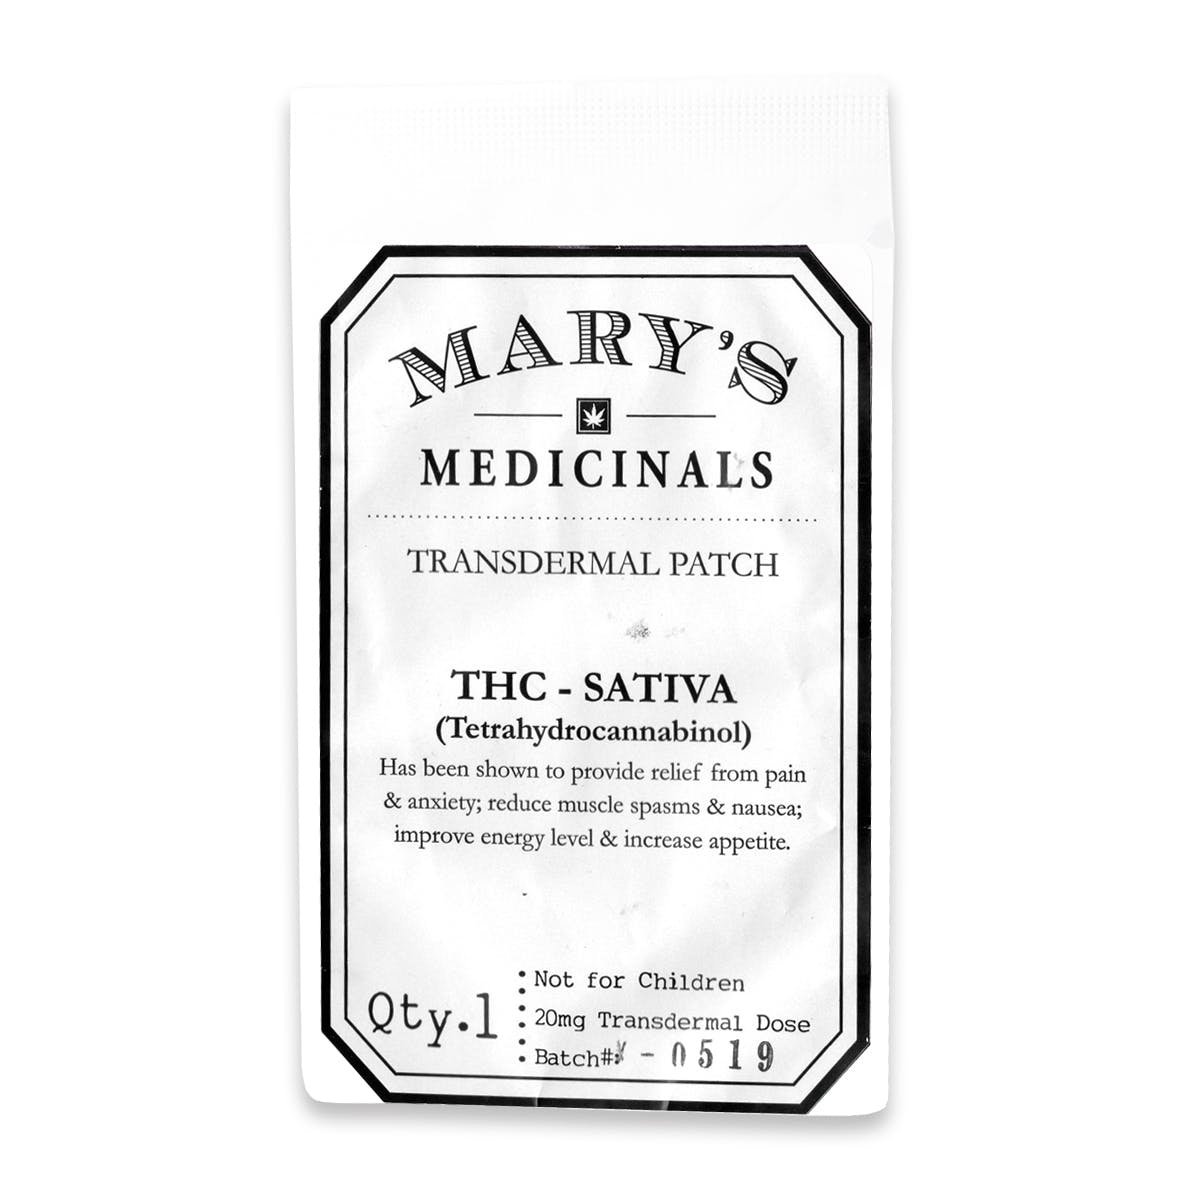 marijuana-dispensaries-pharmkent-in-elkton-thc-sativa-transdermal-patch-2c-20mg-med